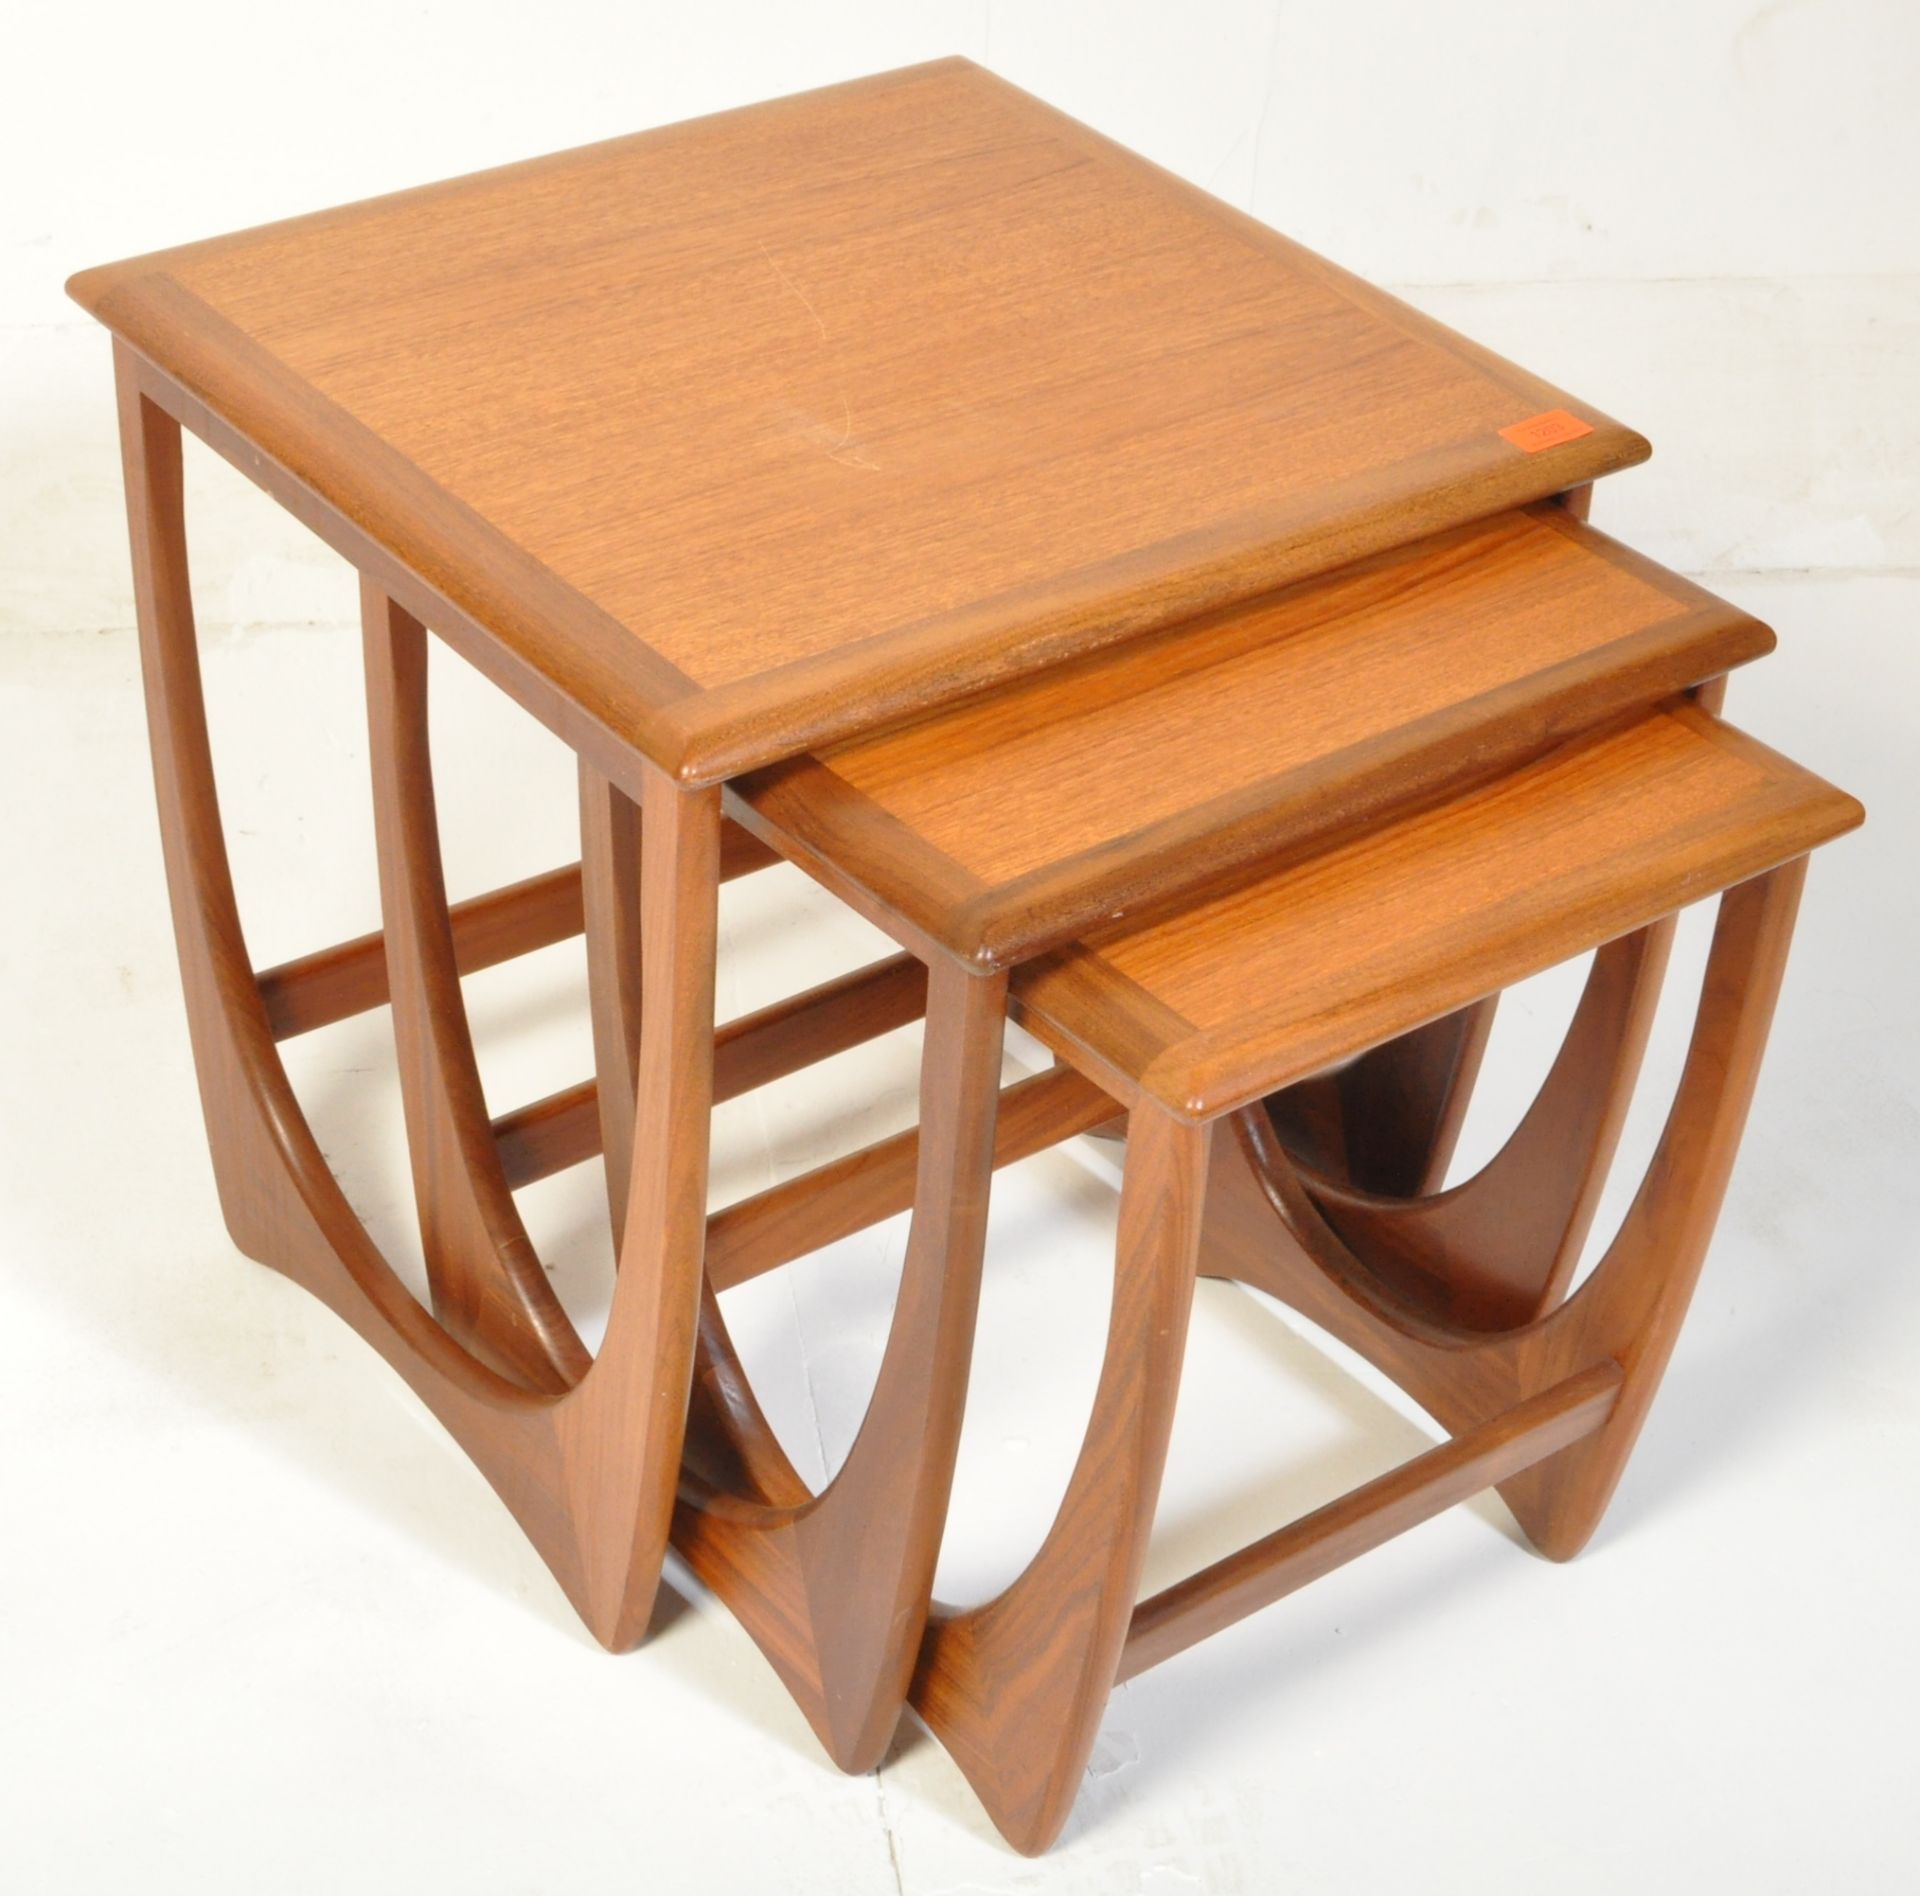 G PLAN - QUADRILLE - MID CENTURY TEAK WOOD NEST OF TABLES - Image 4 of 4